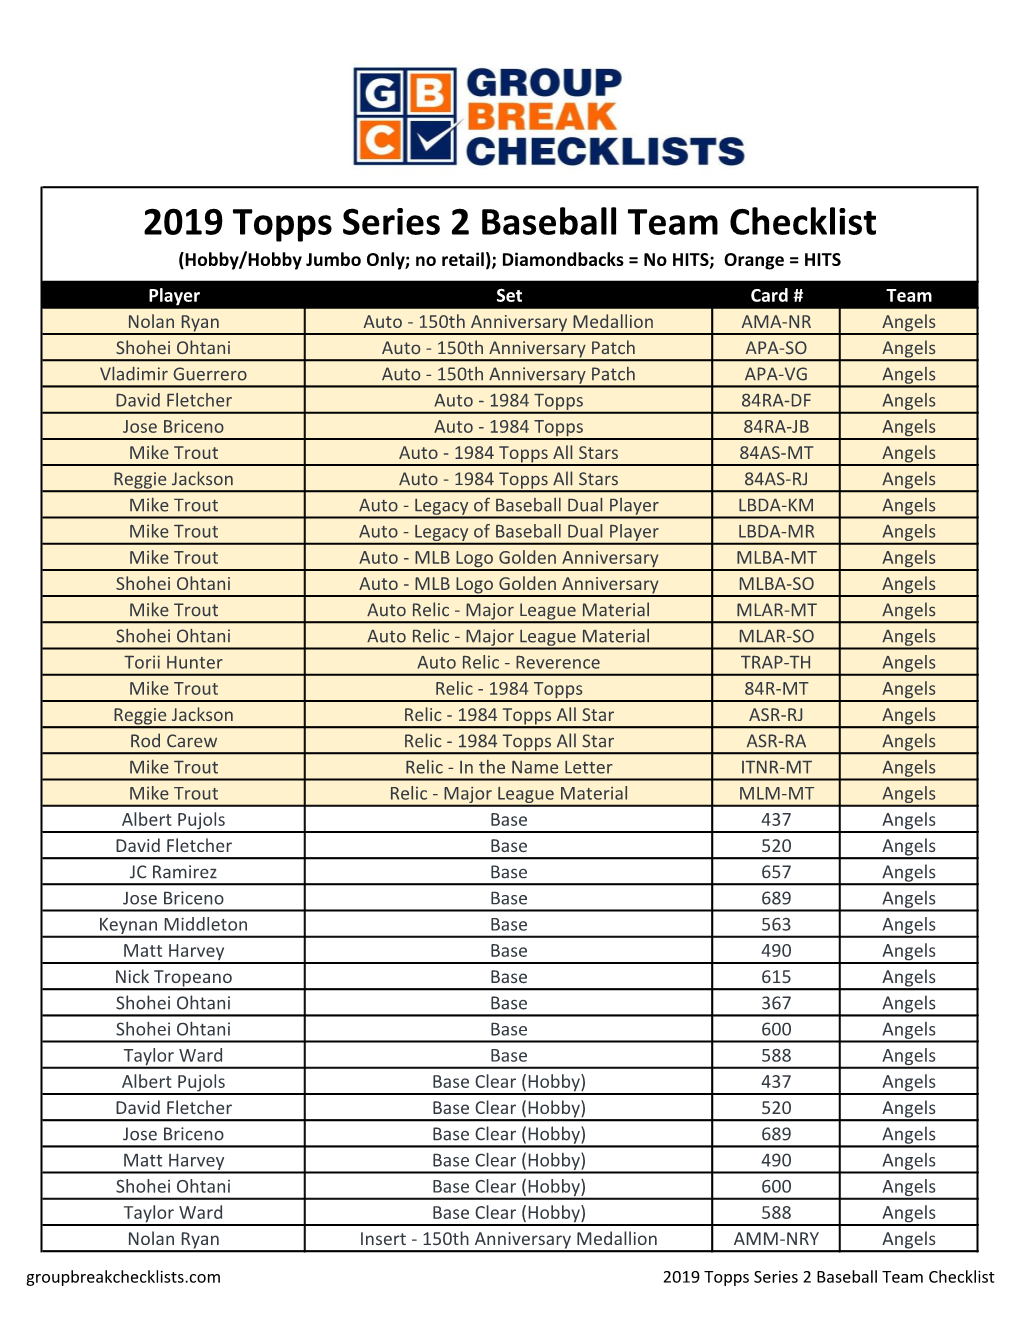 2019 Topps Baseball Series 1 Checklist